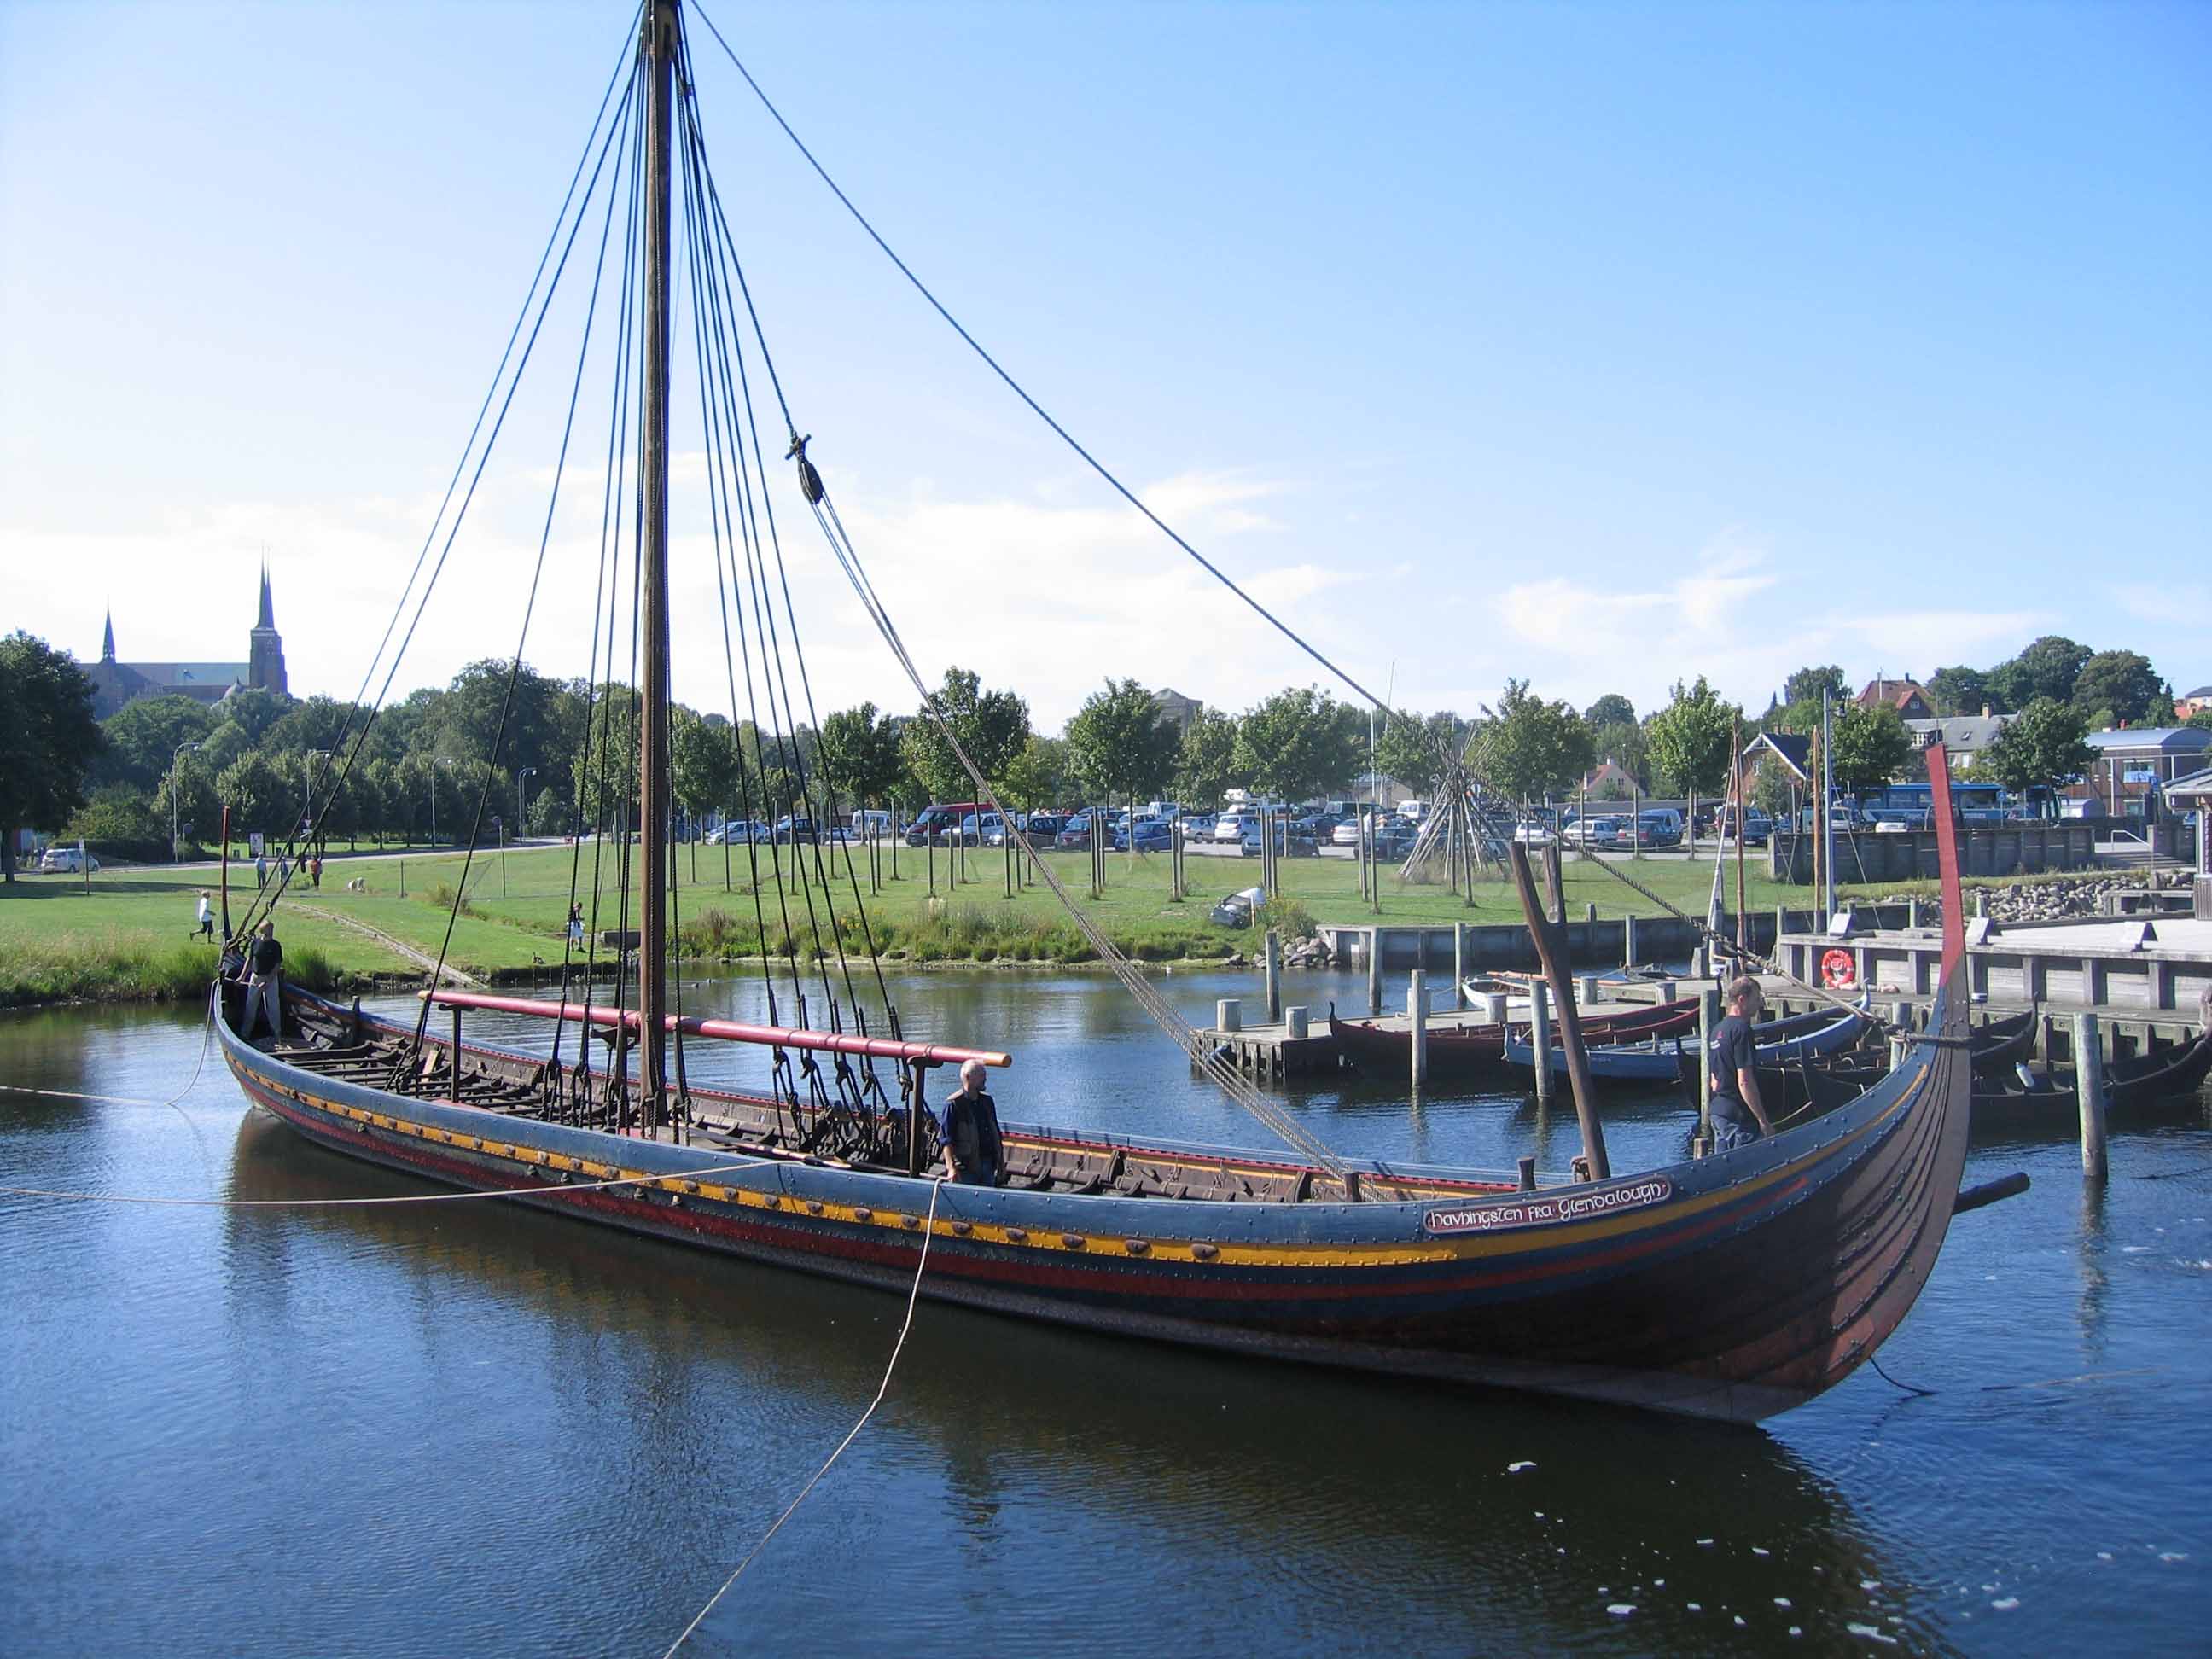 The Viking ship museum